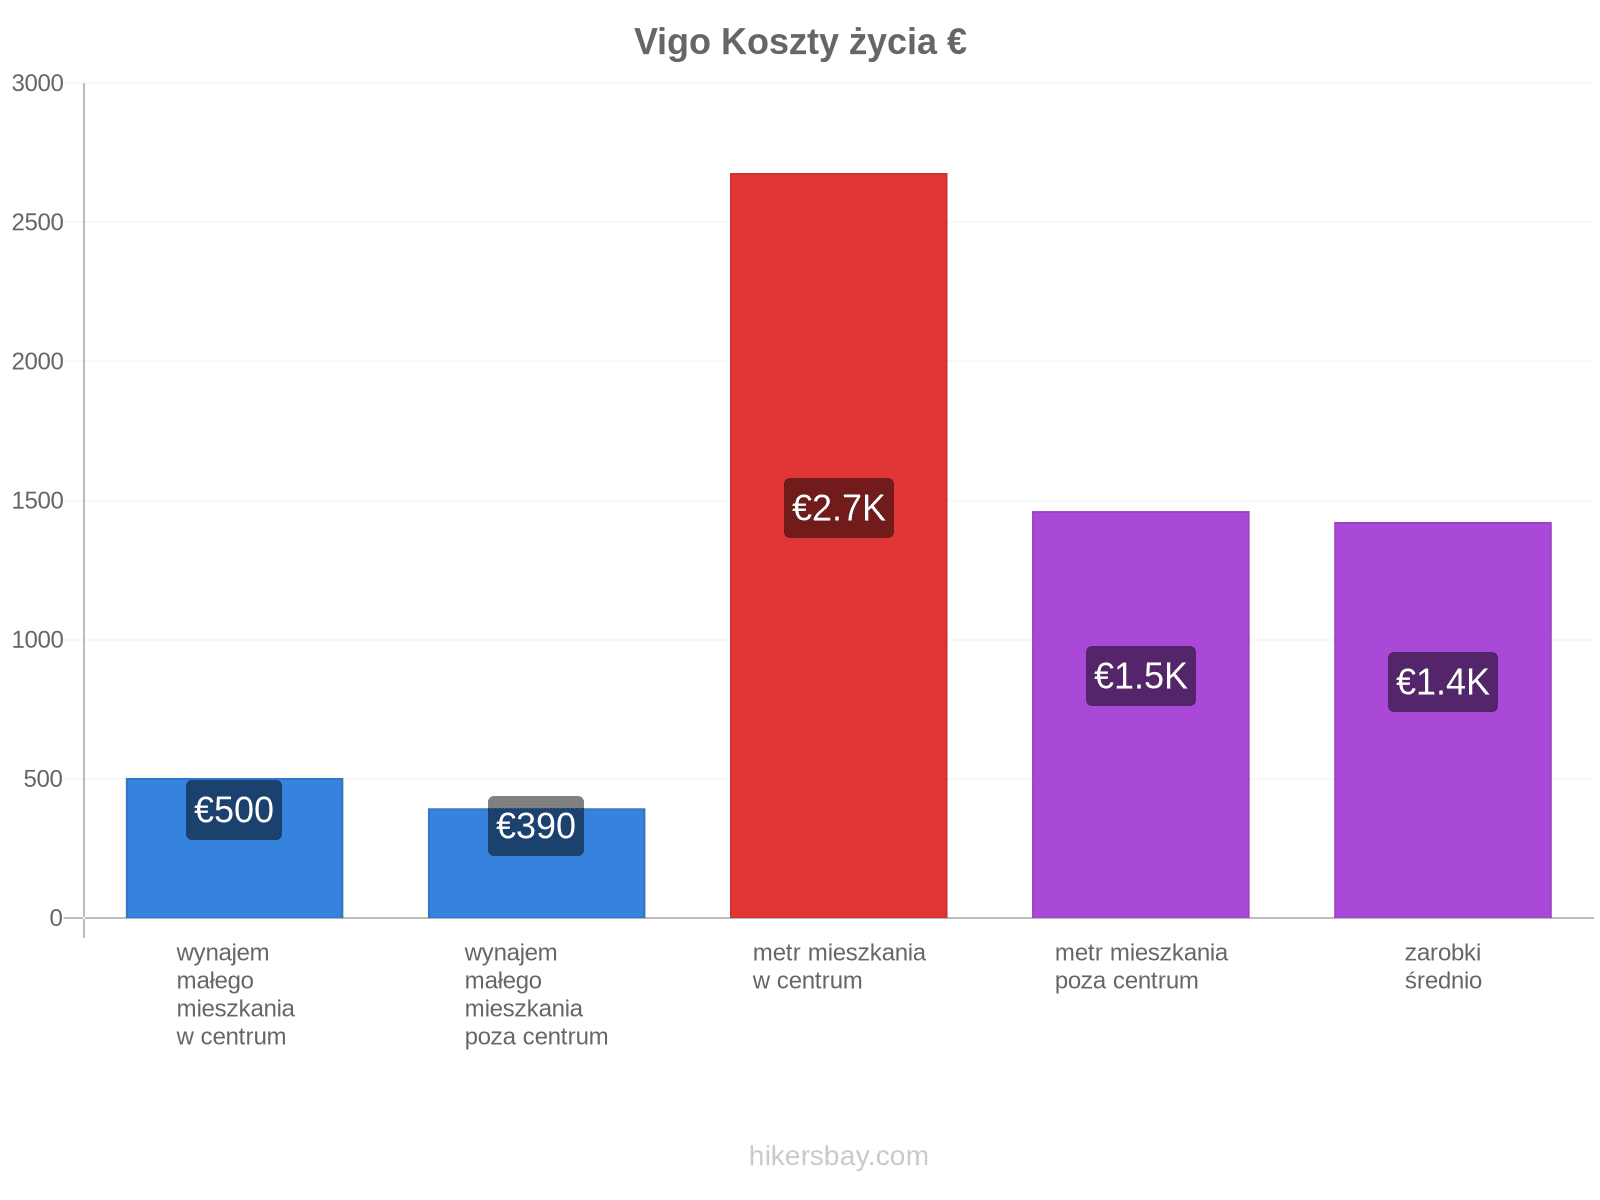 Vigo koszty życia hikersbay.com